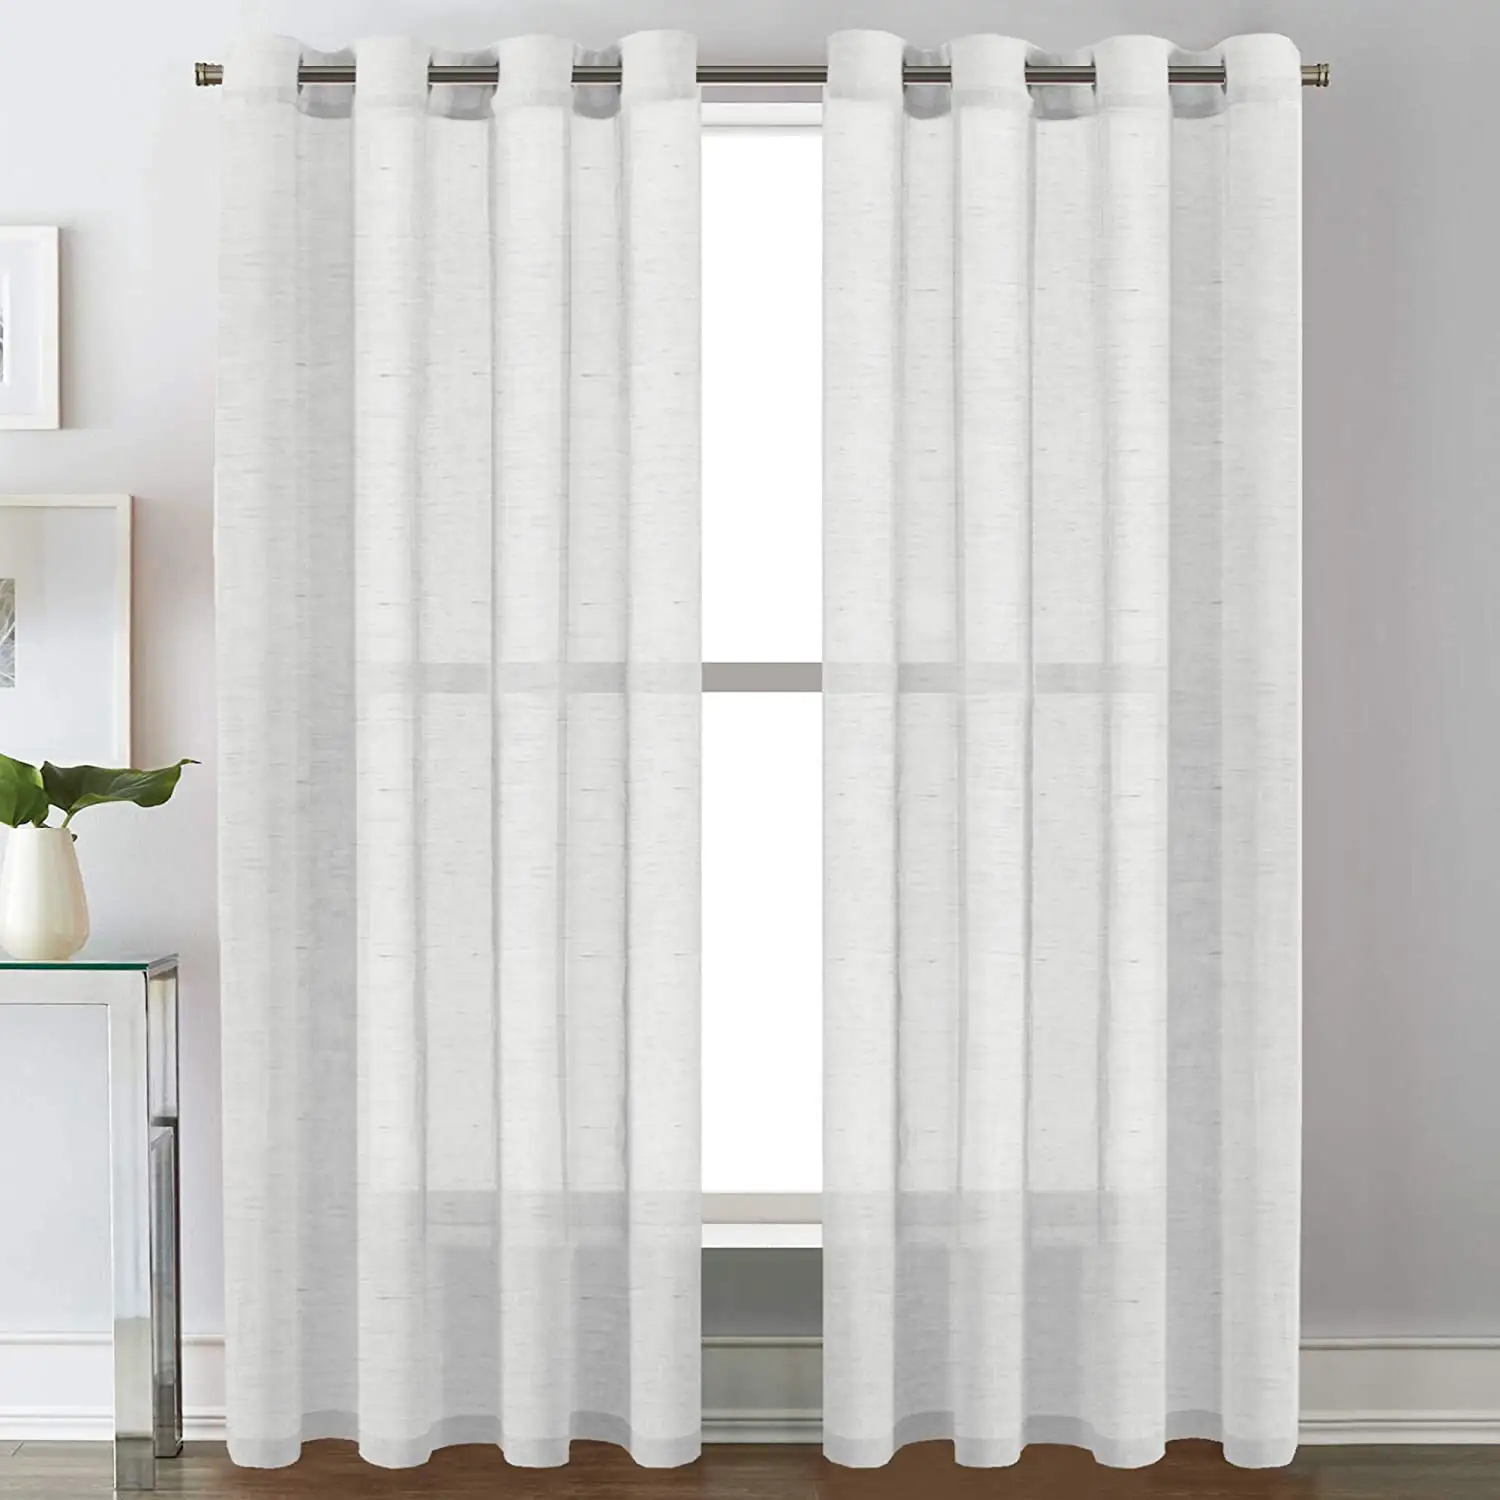 Lusia-3 Manufacturer High Quality Doris Slub Linen Look Sheer Curtain Fabric Home Textile Fabric